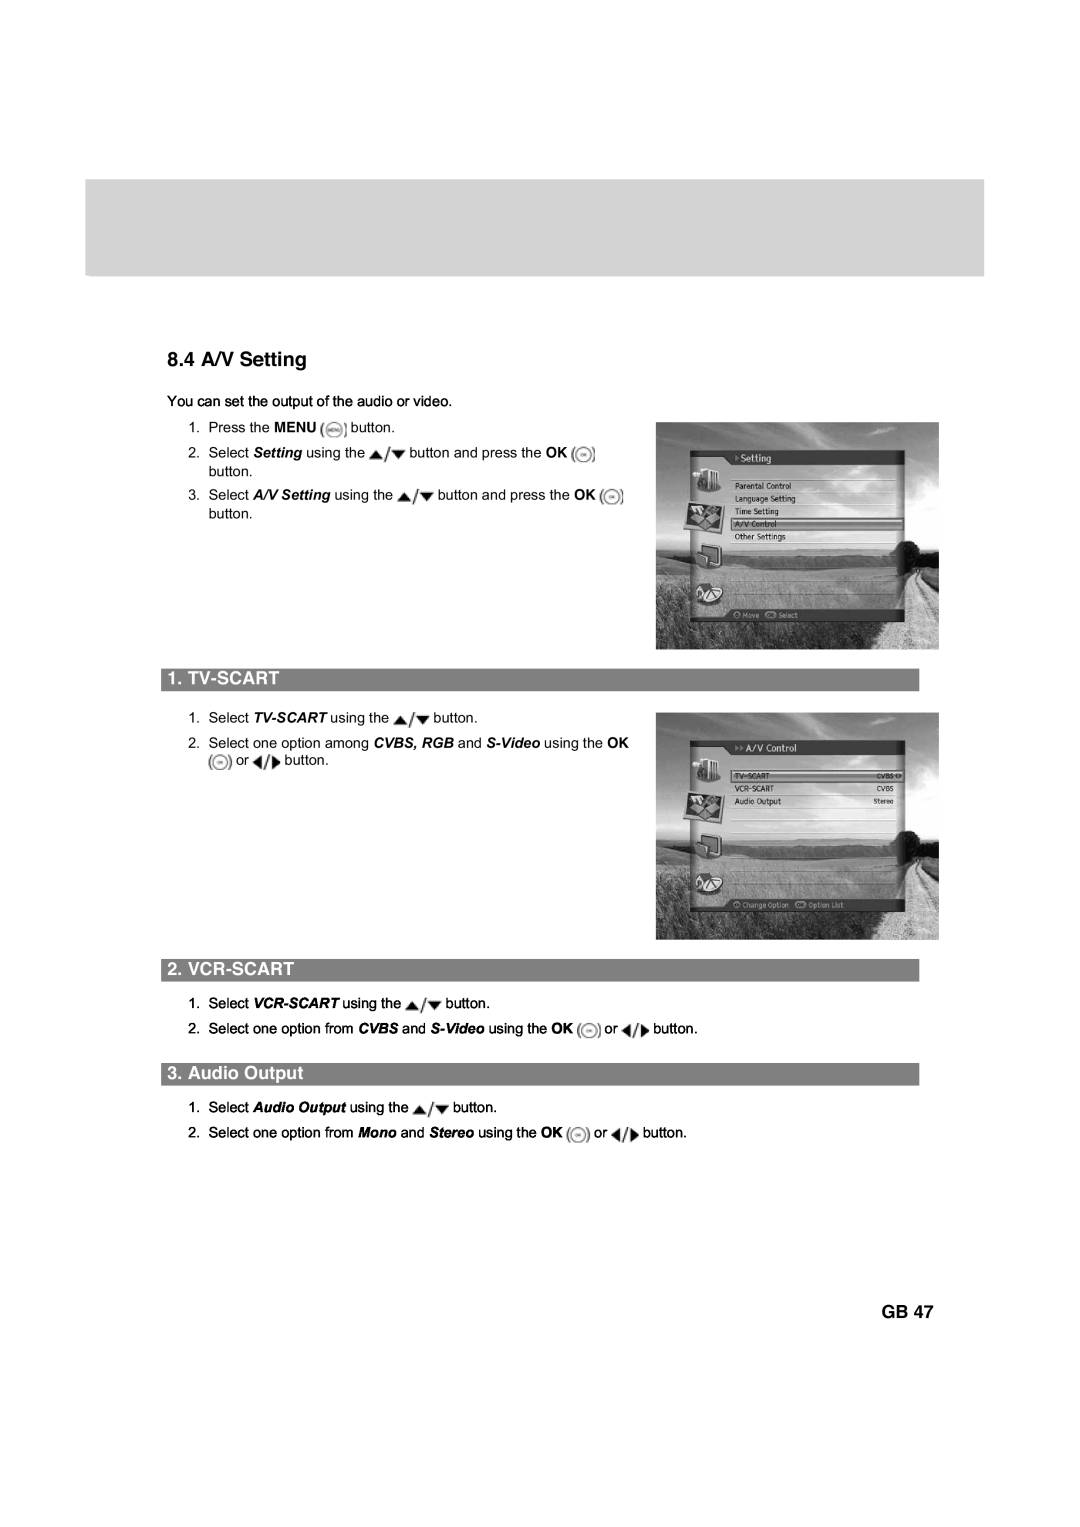 Humax HDCI-2000 manual 8.4 A/V Setting, Tv-Scart, Vcr-Scart, Audio Output 